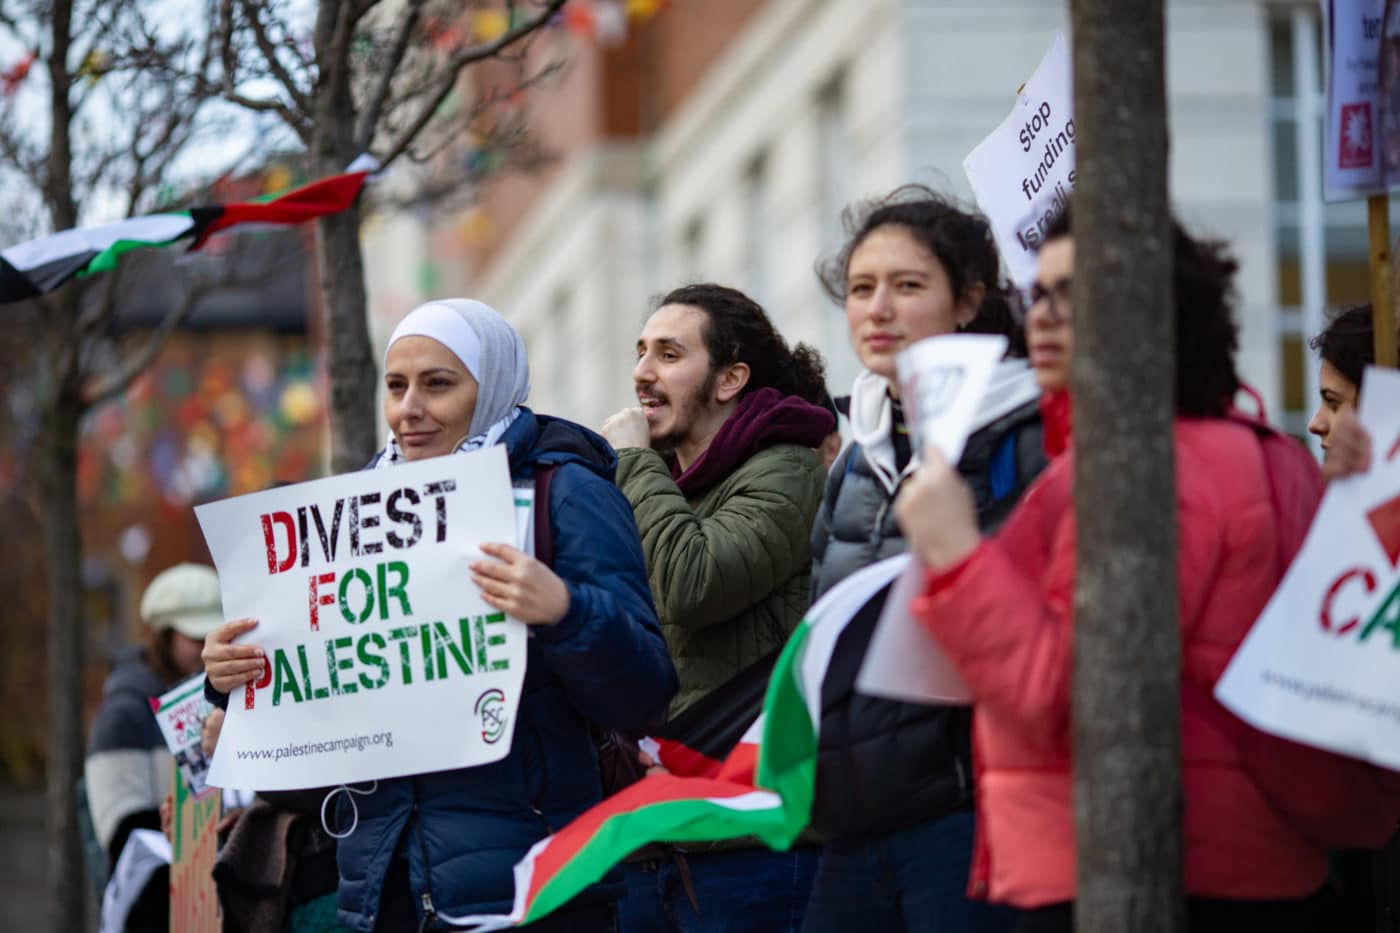 023-2 - Palestine Solidarity Campaign